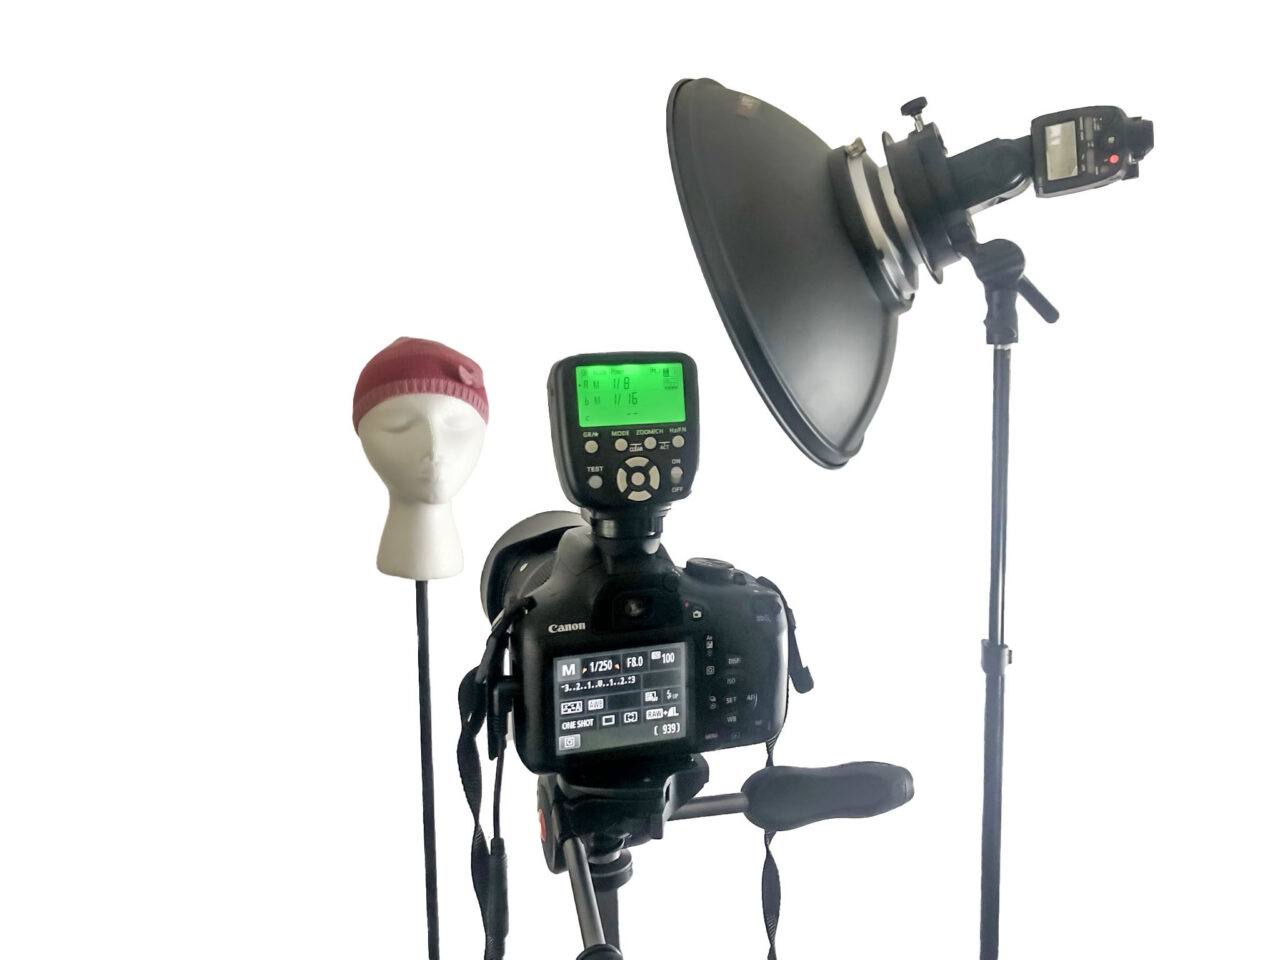 Key Light Photography: Studio set-up, camera, radio trigger & flash light.